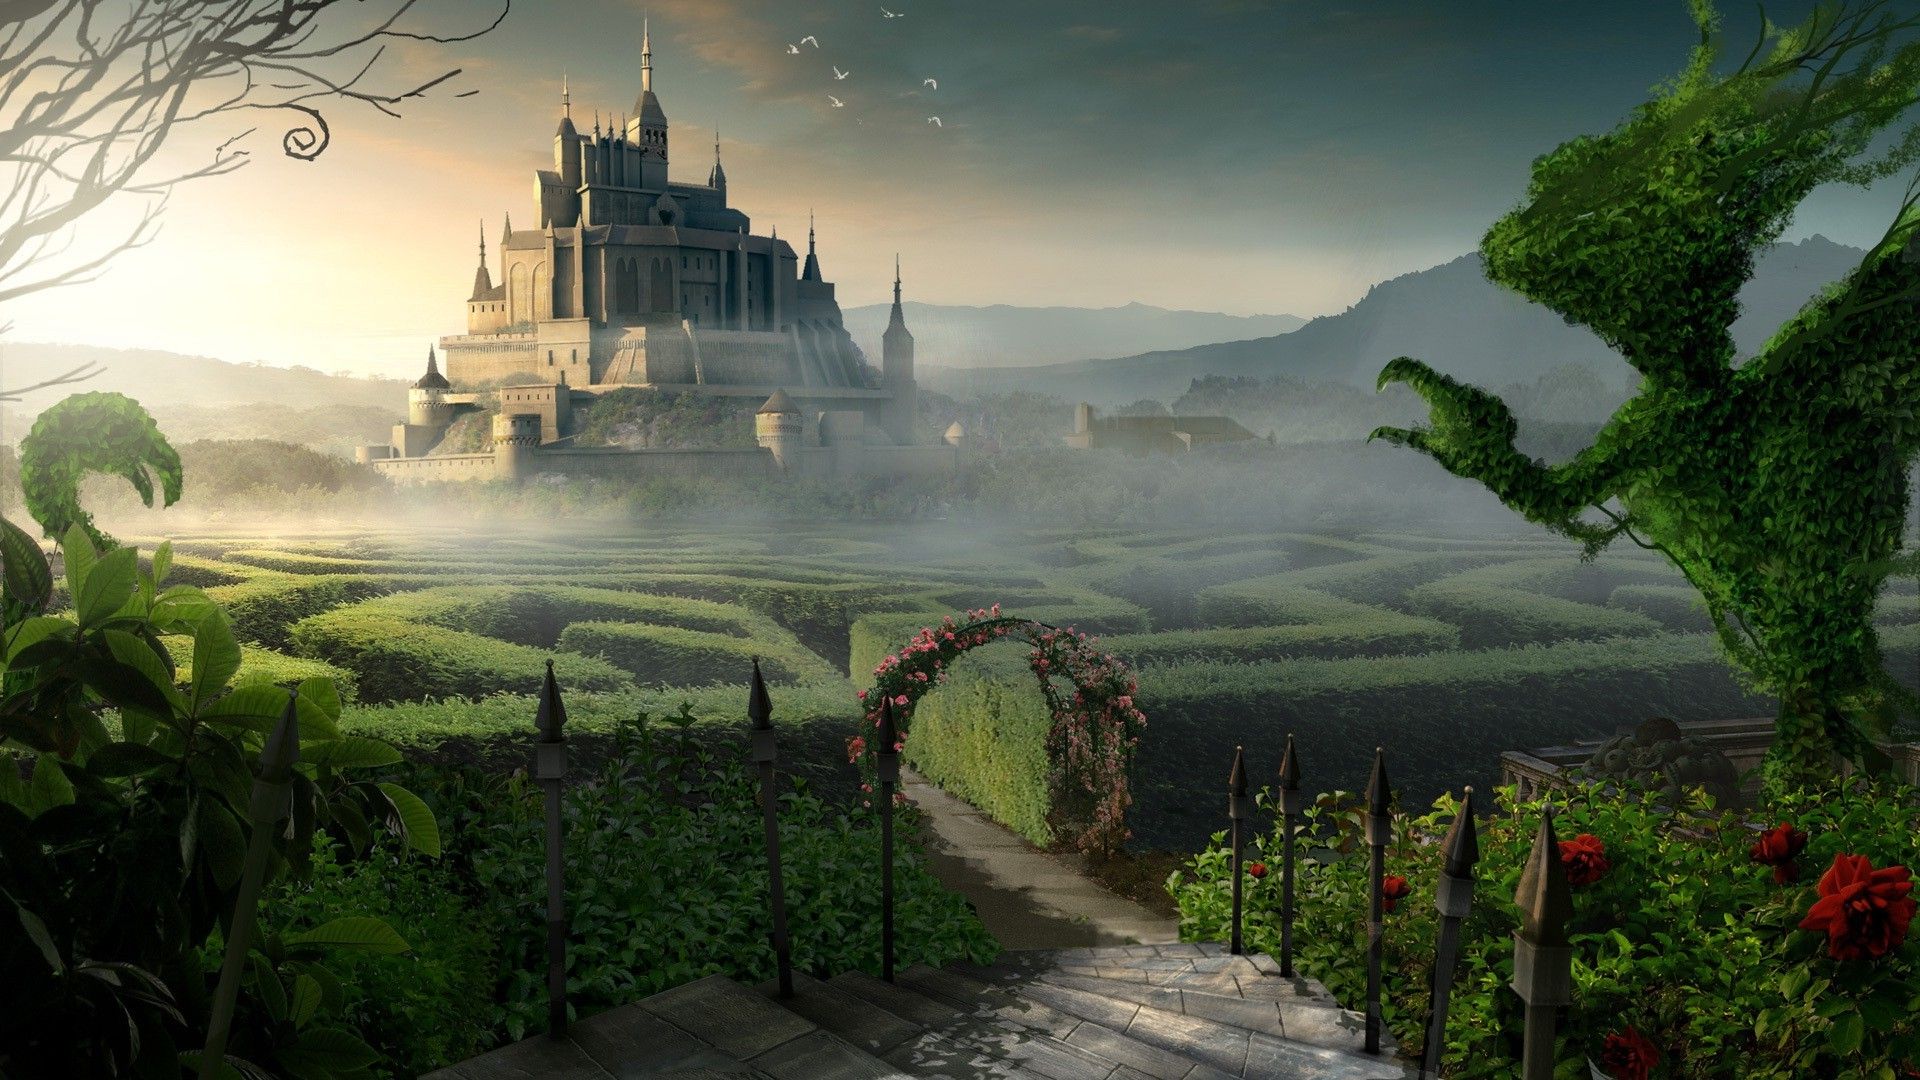 Fantasy Castle Landscape Wallpapers